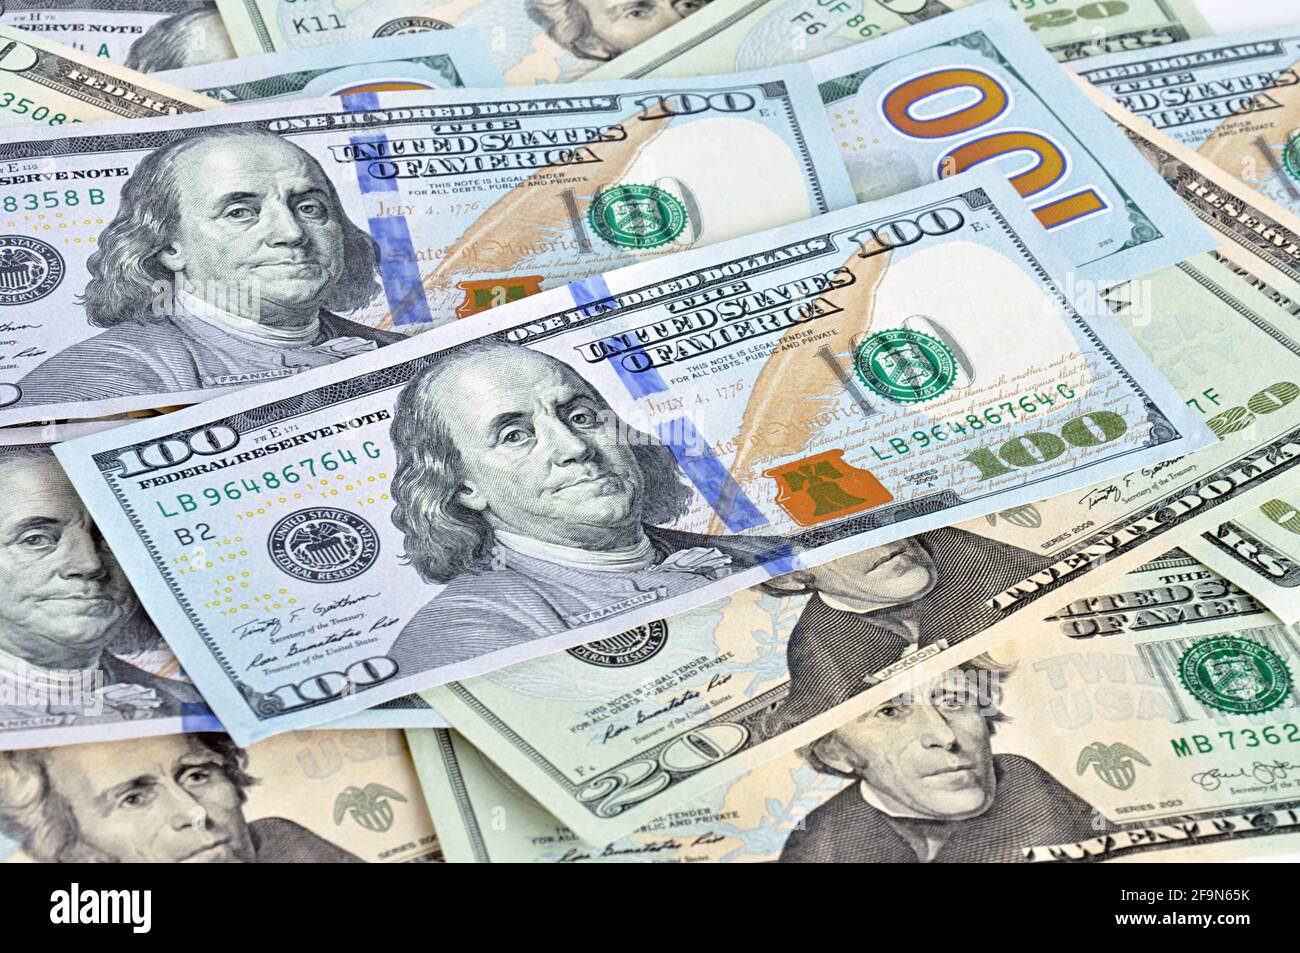 Money - United States dollars (USD) bills Stock Photo